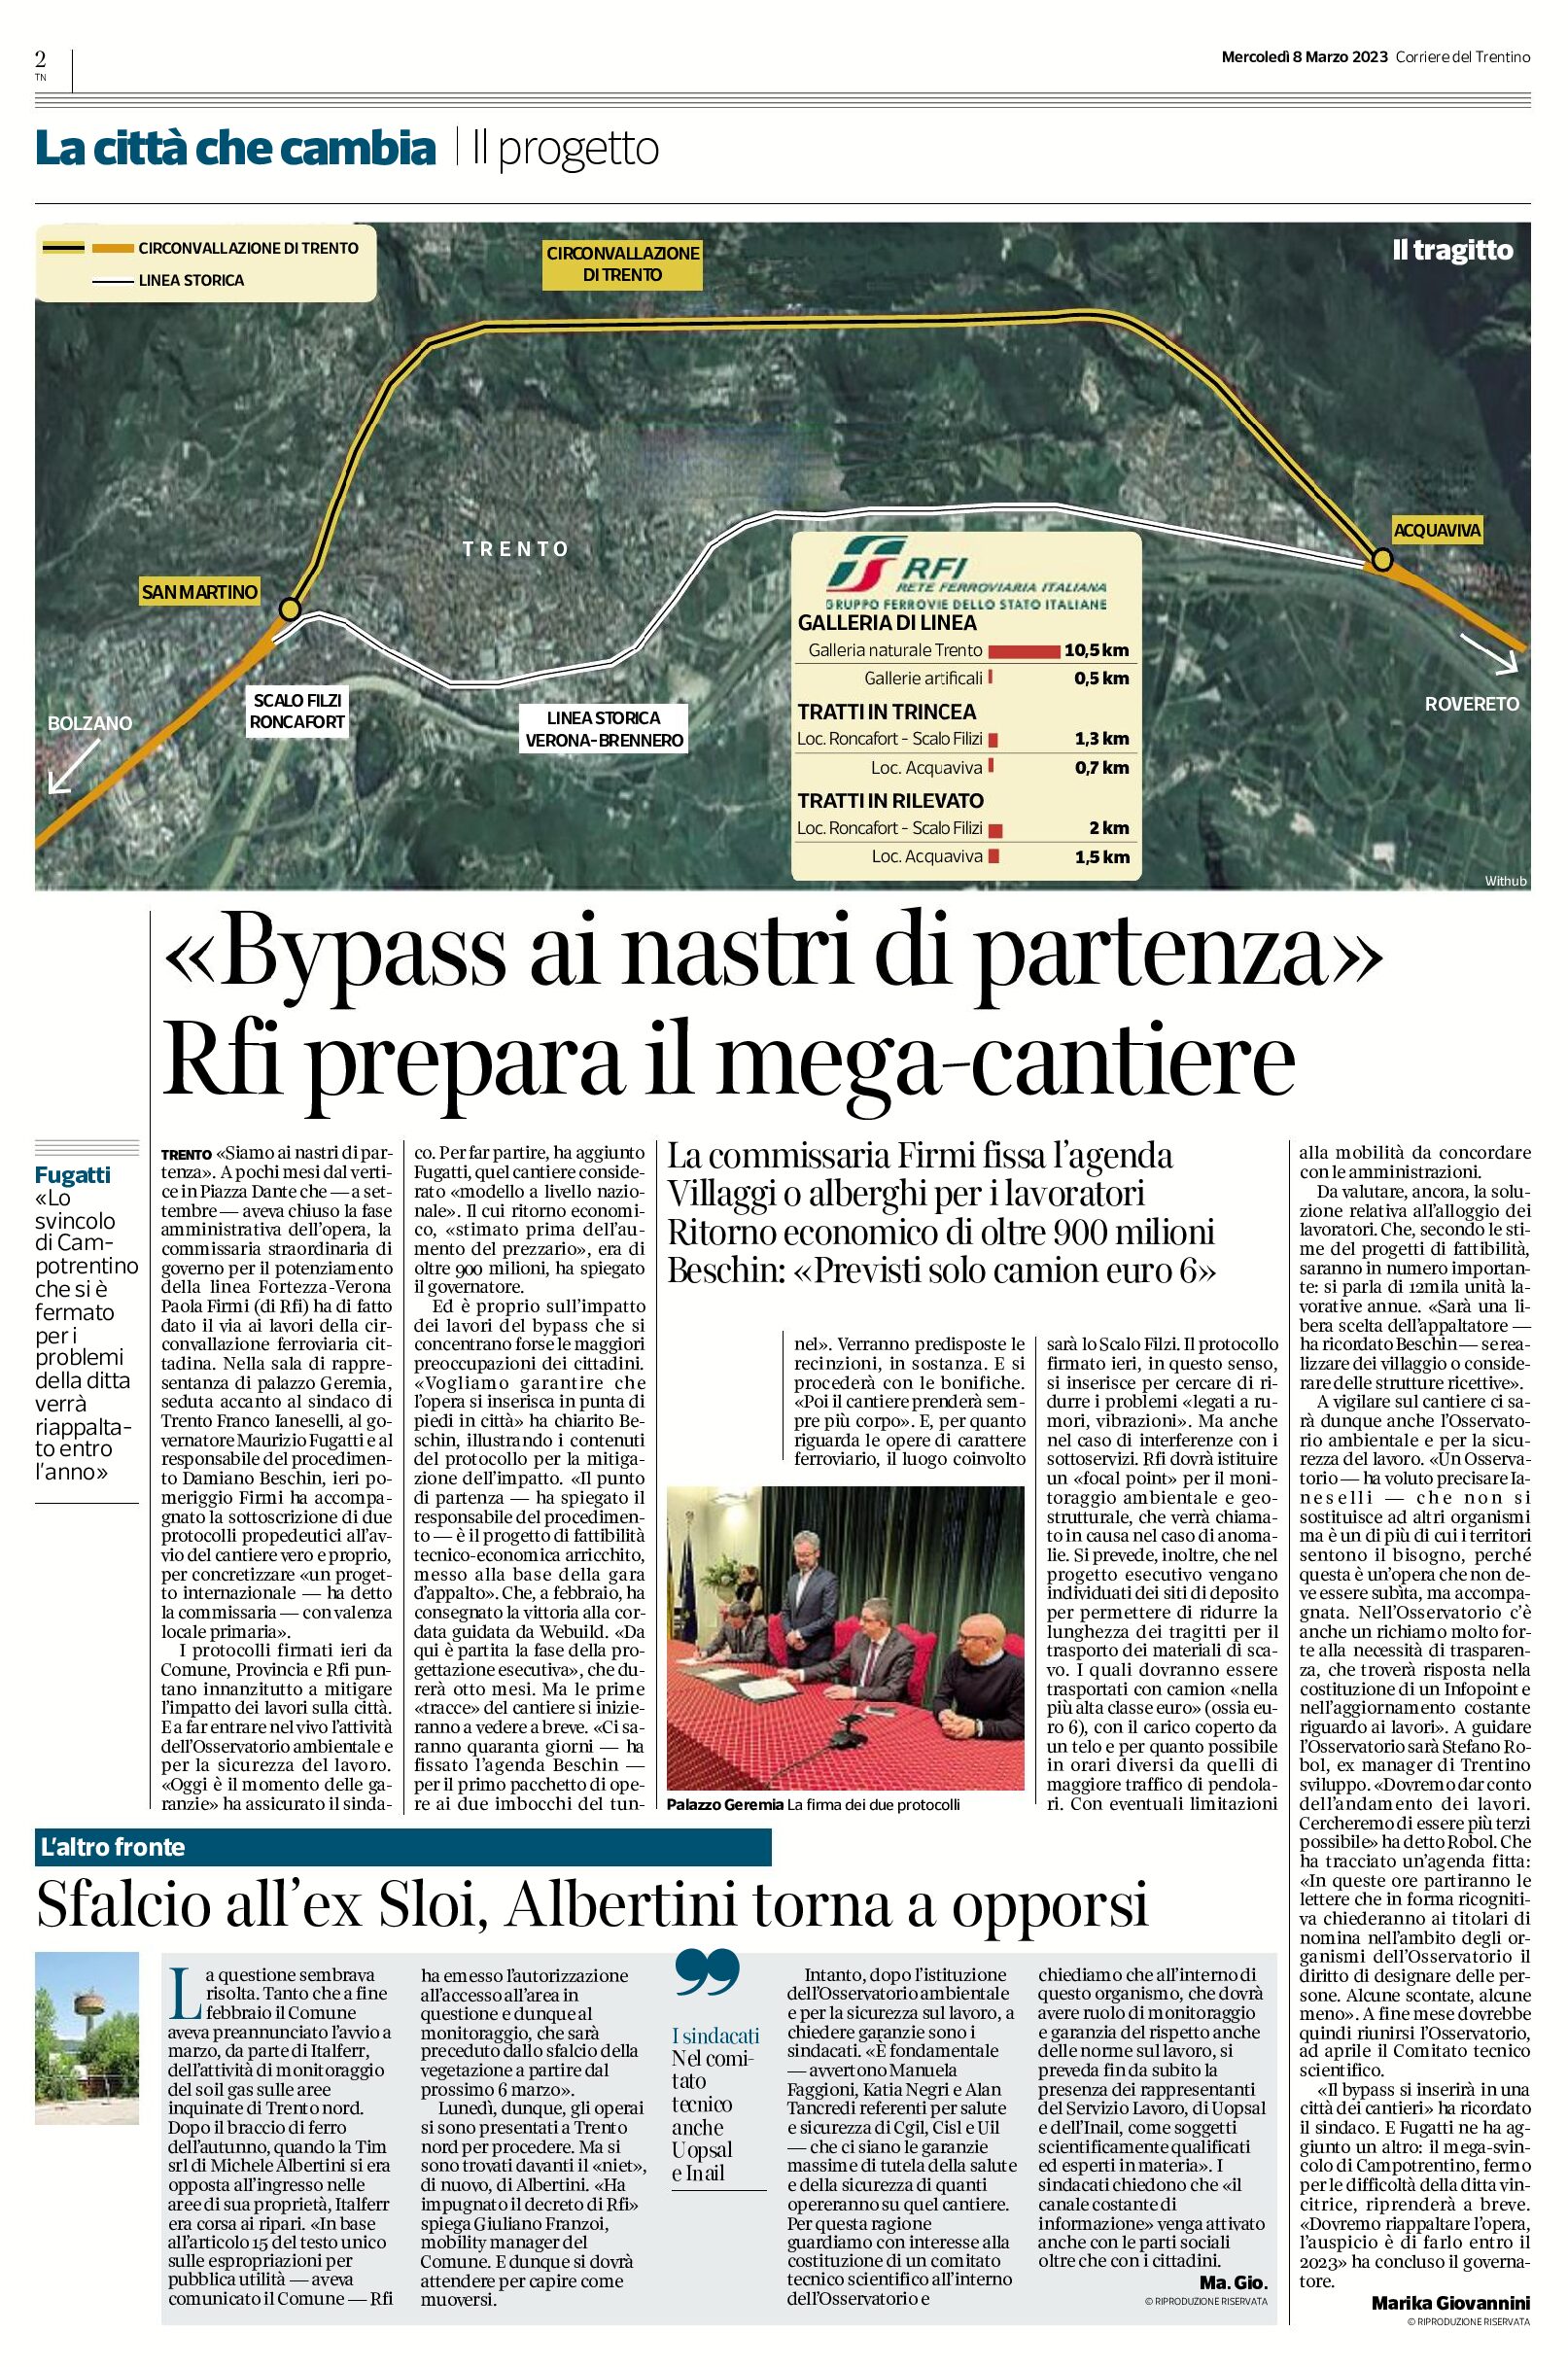 Trento, bypass: Rfi prepara il mega-cantiere